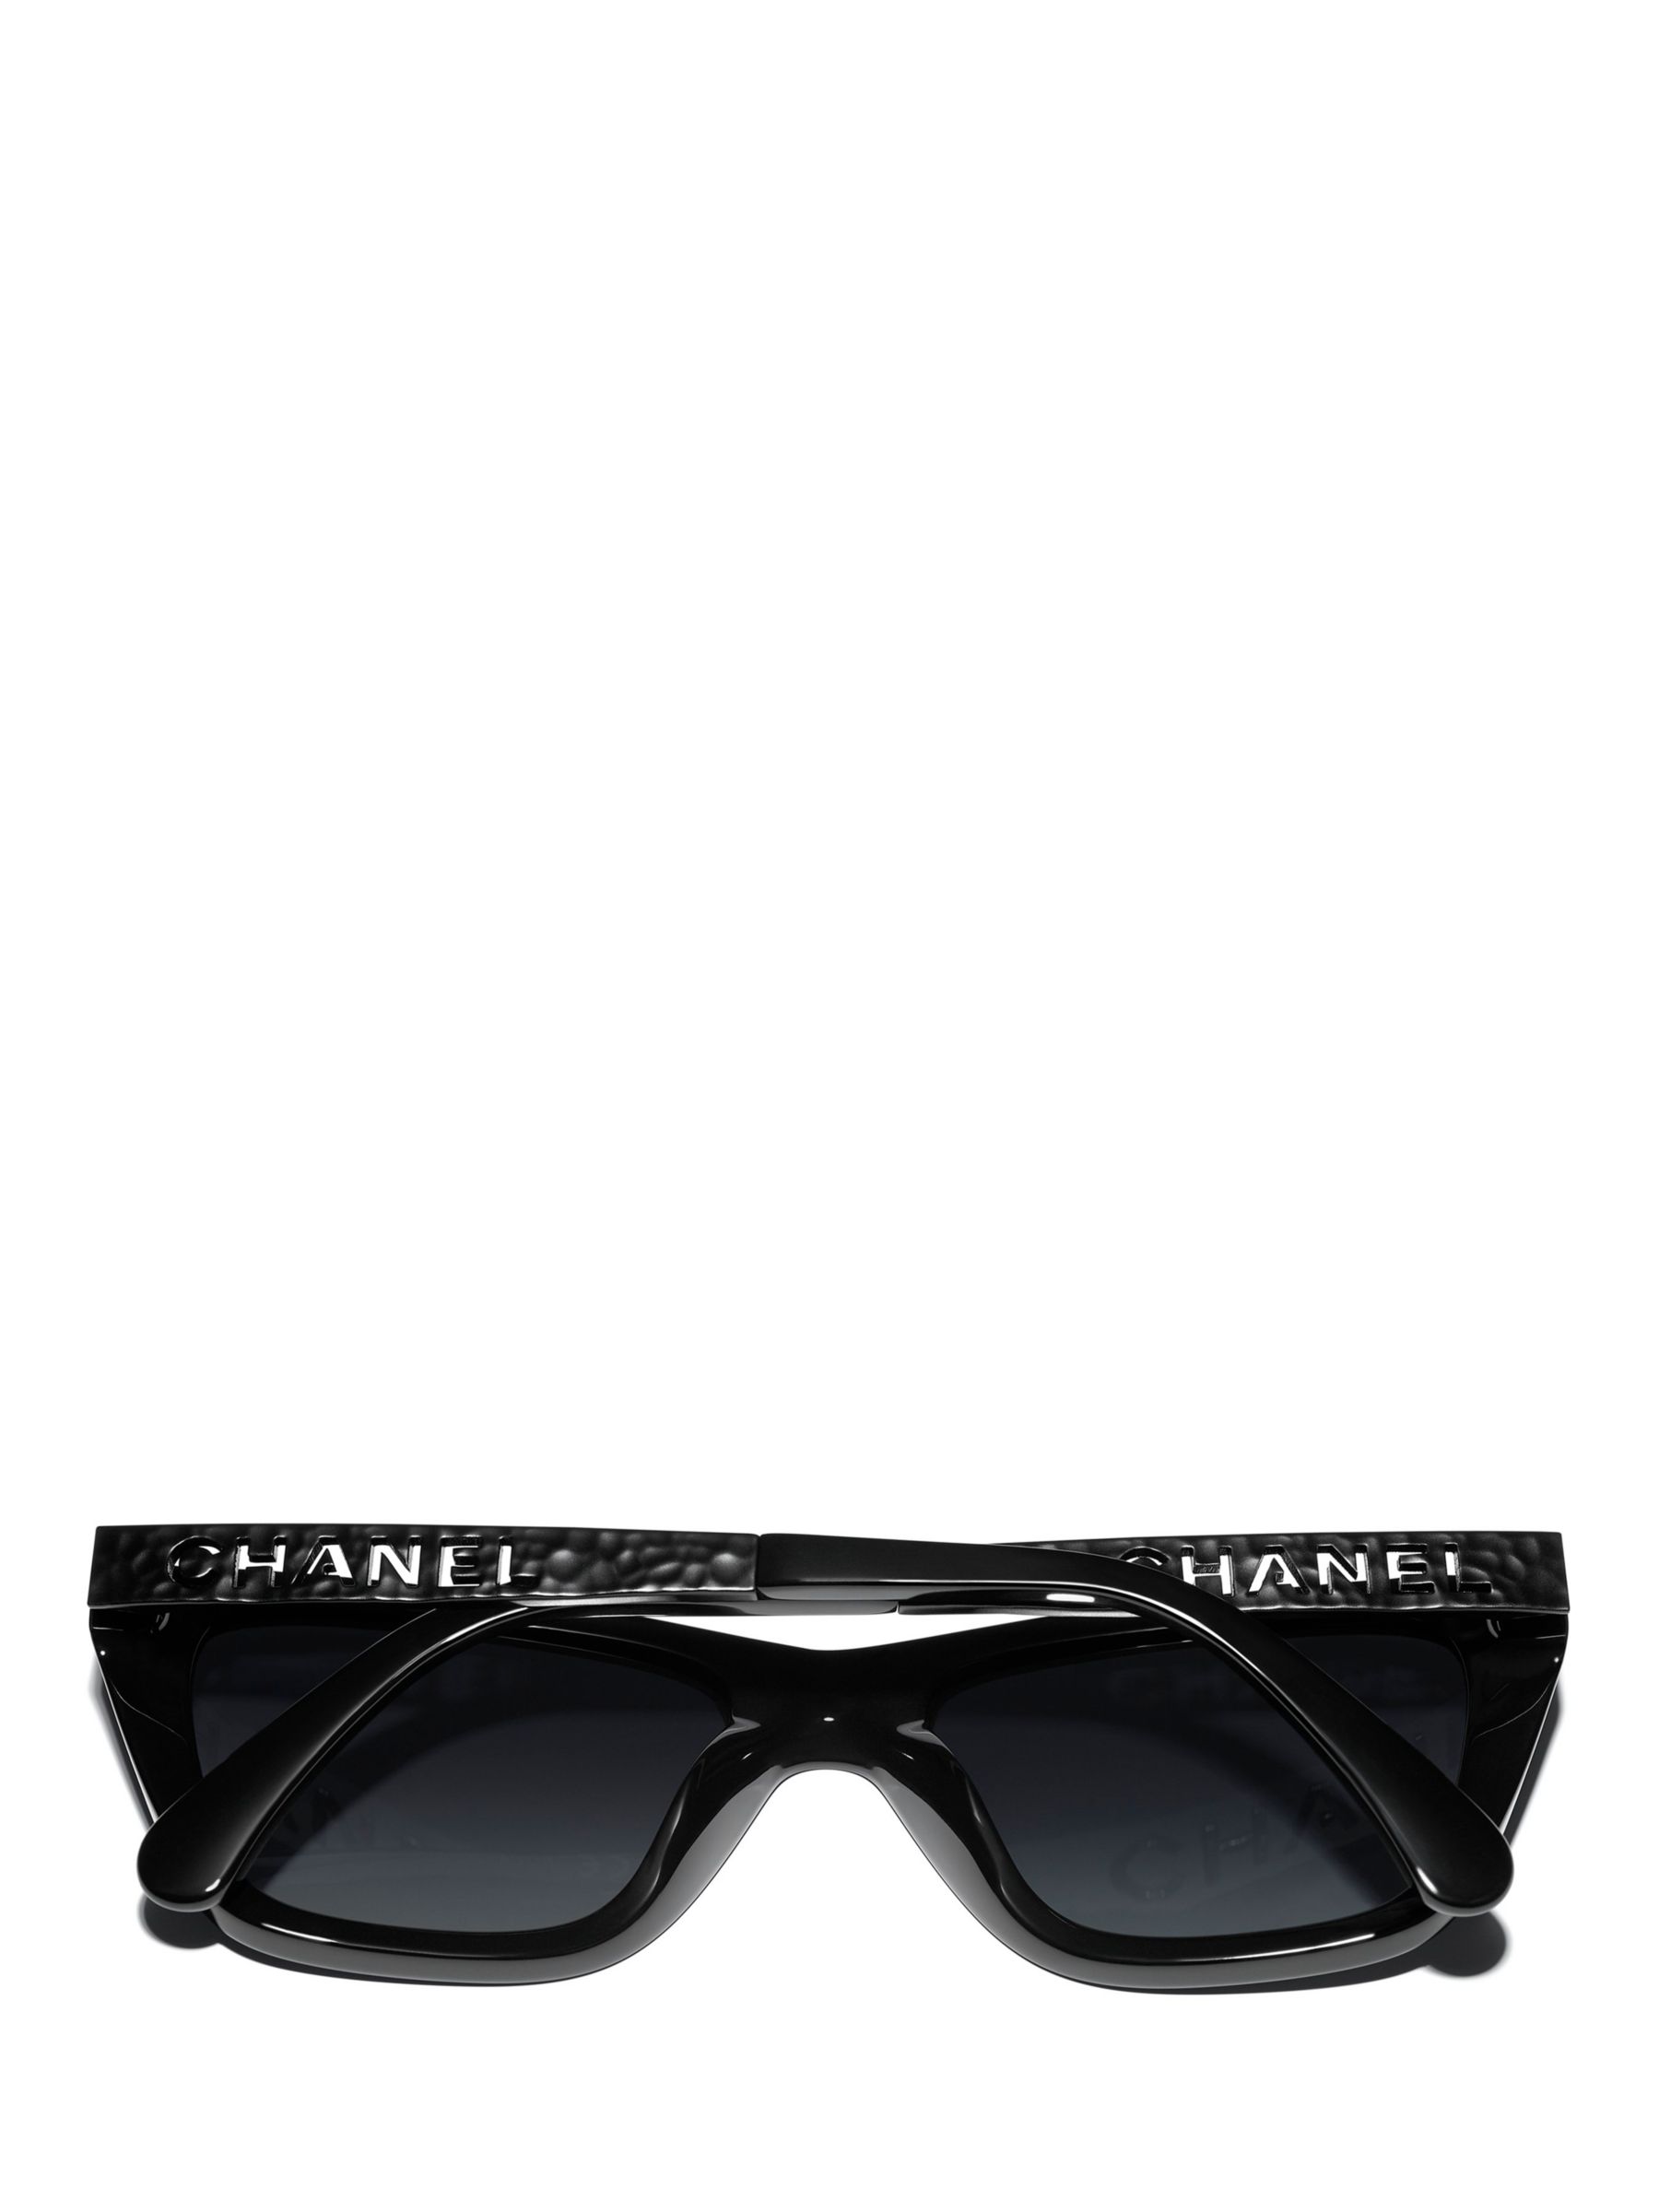 Chanel - Square Sunglasses - Black Gray Gradient - Chanel Eyewear - Avvenice